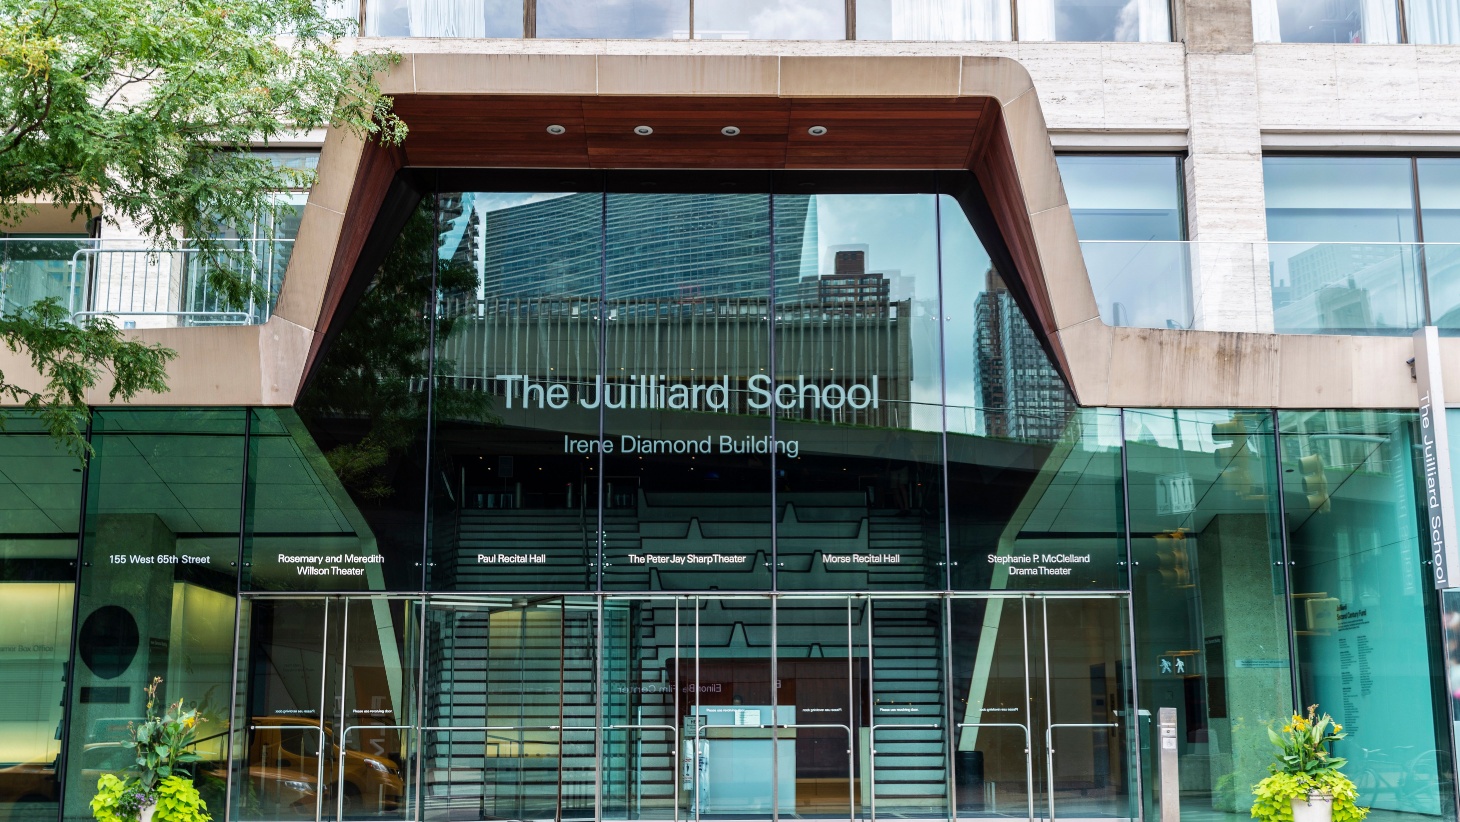 Juilliard acceptance rate alumni cost, where is Juilliard